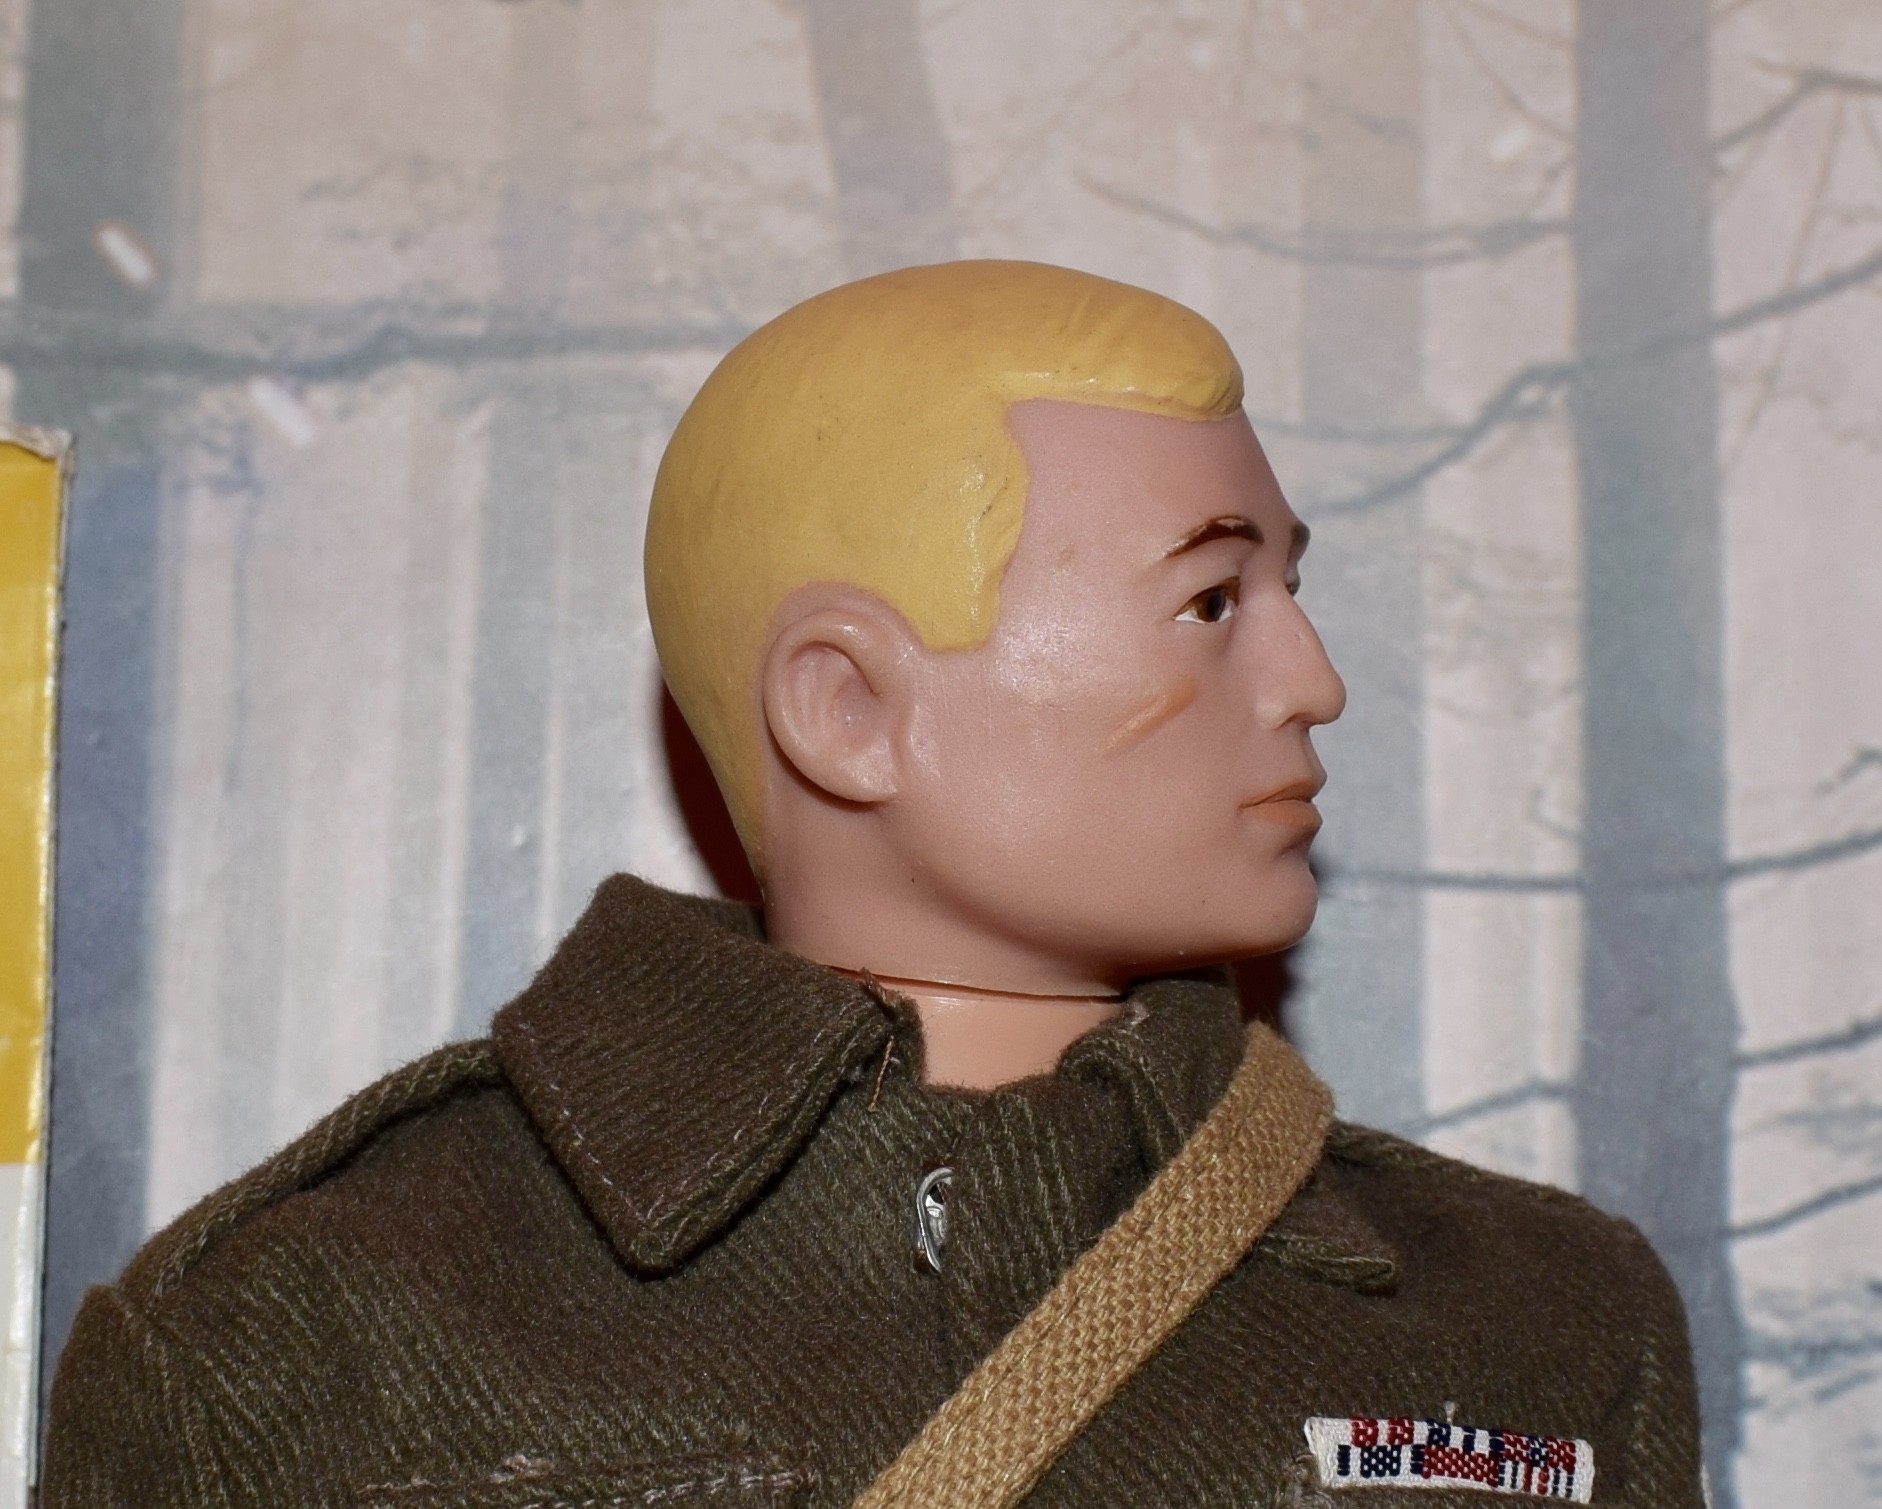 Original Vintage Action Man Painted Hair British Infantryman - 202